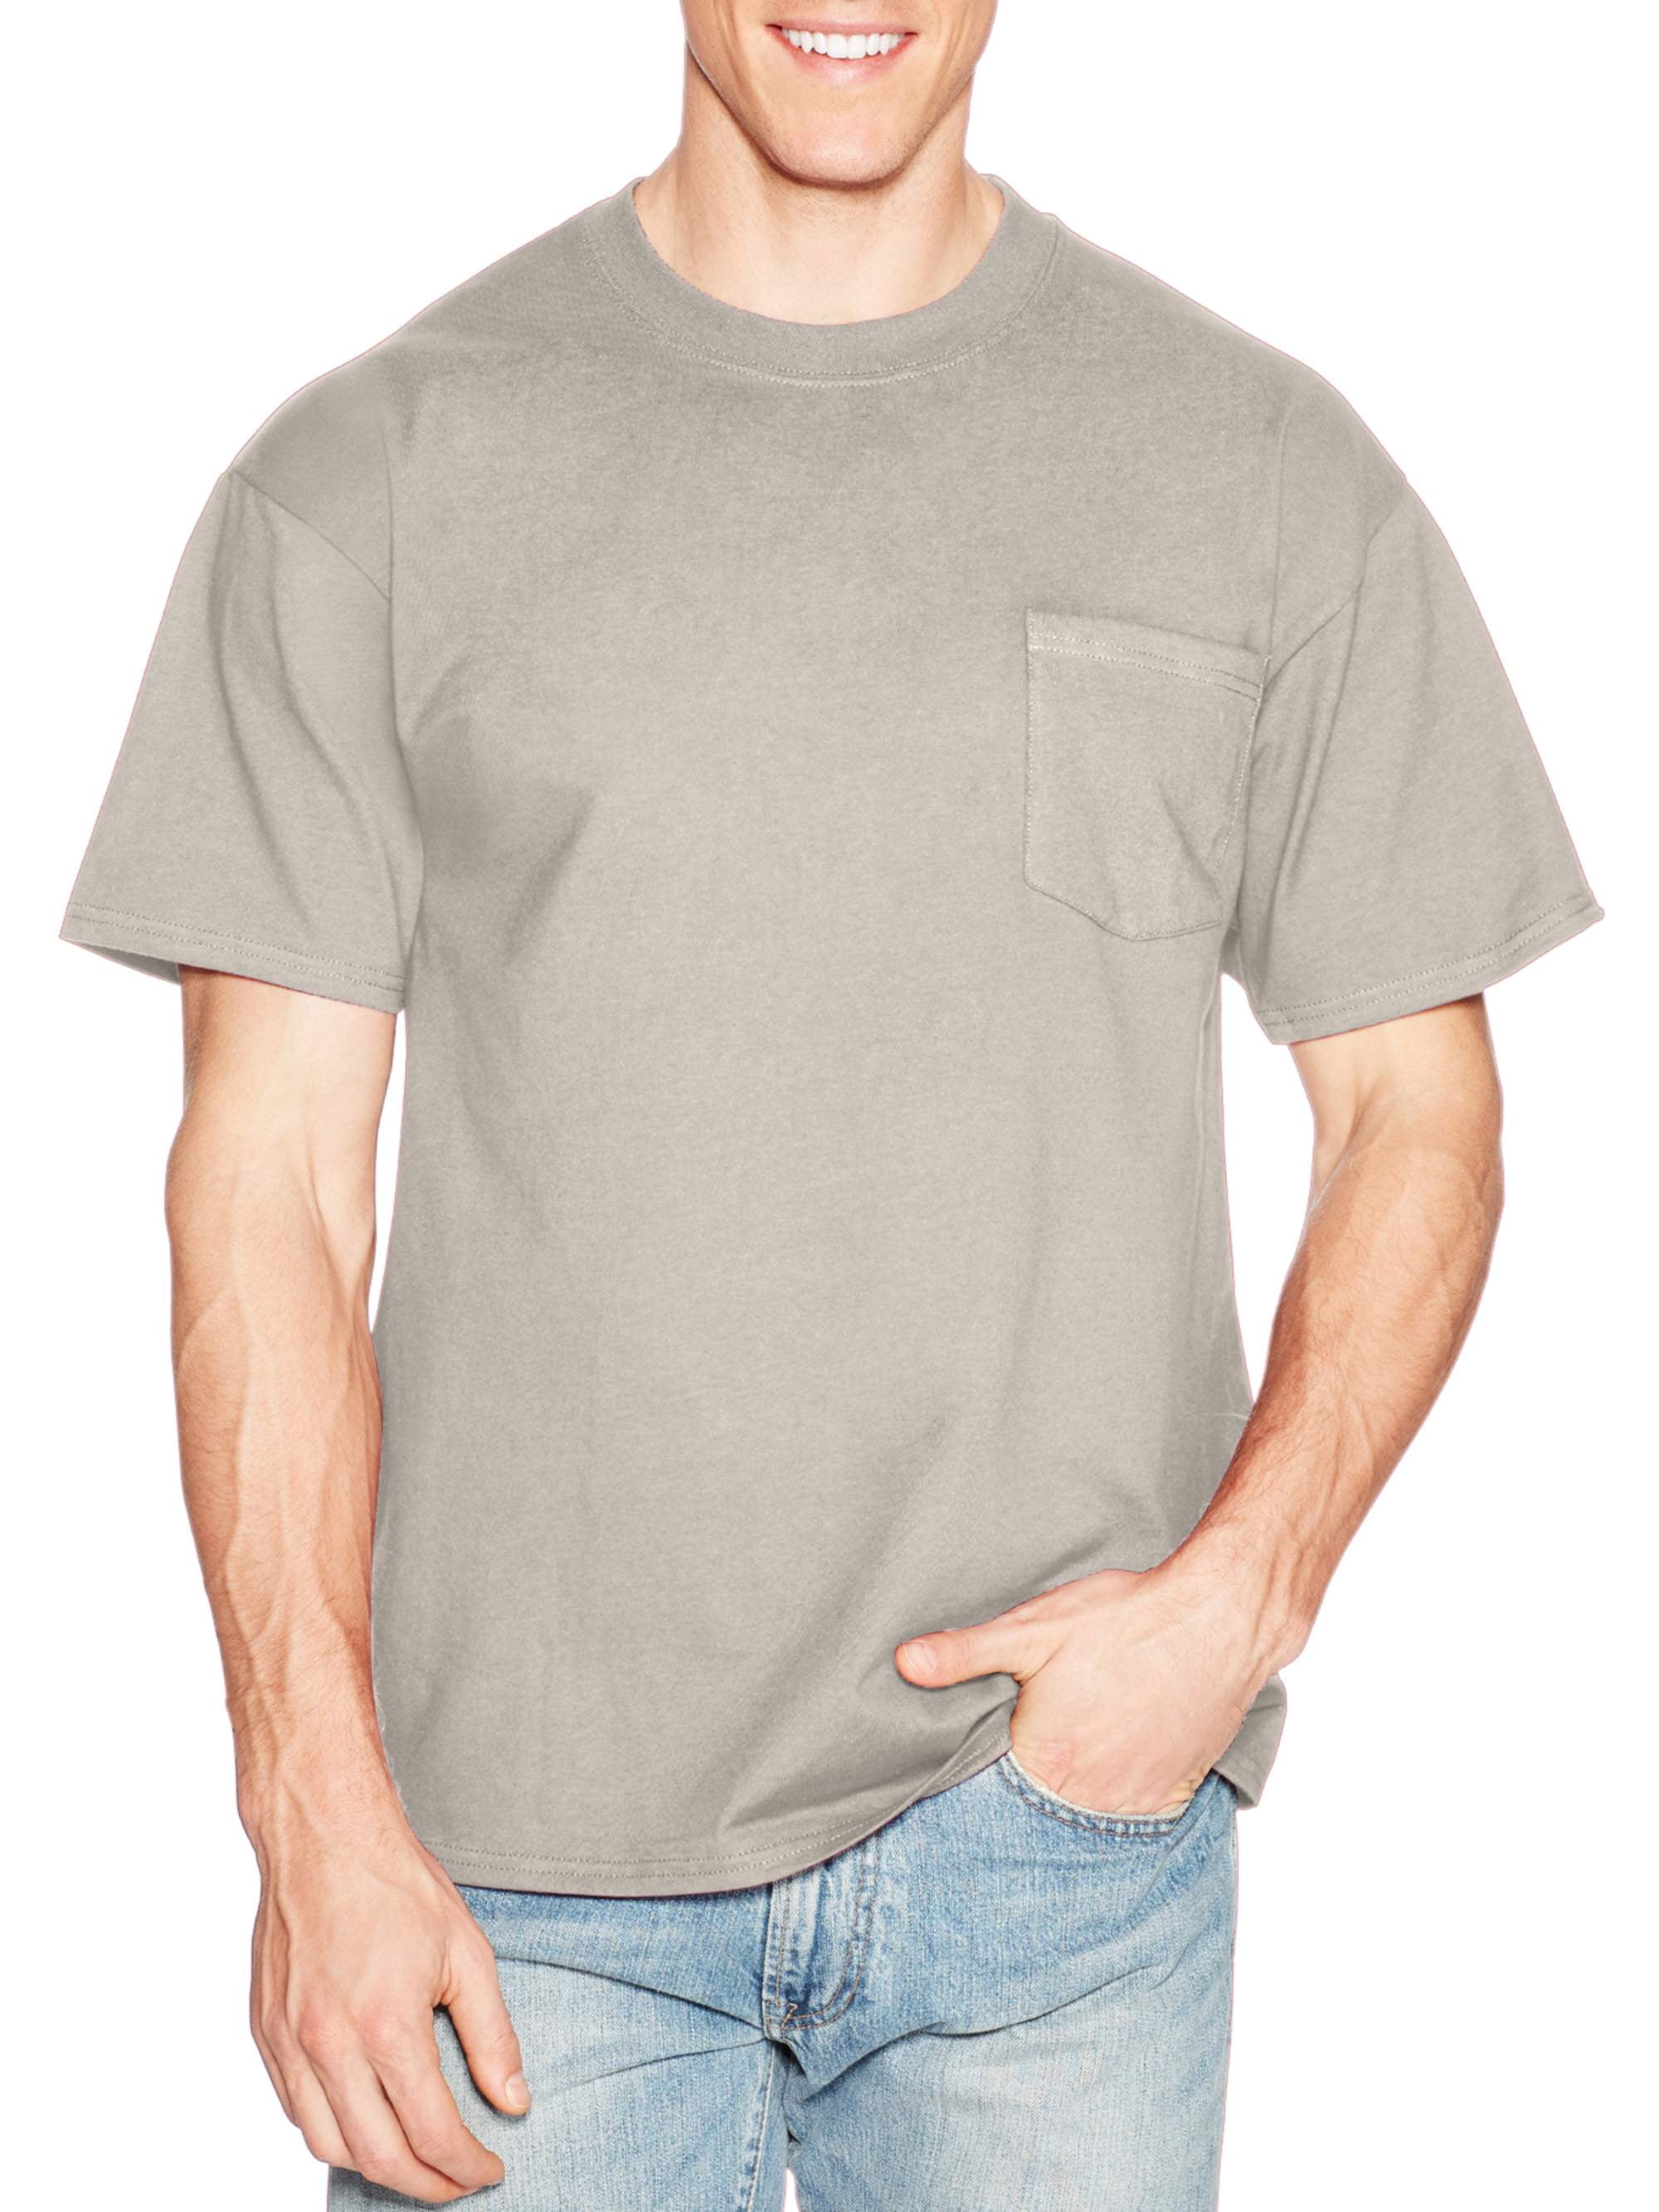 Hanes Mens Short-Sleeve Beefy T-Shirt with Pocket 